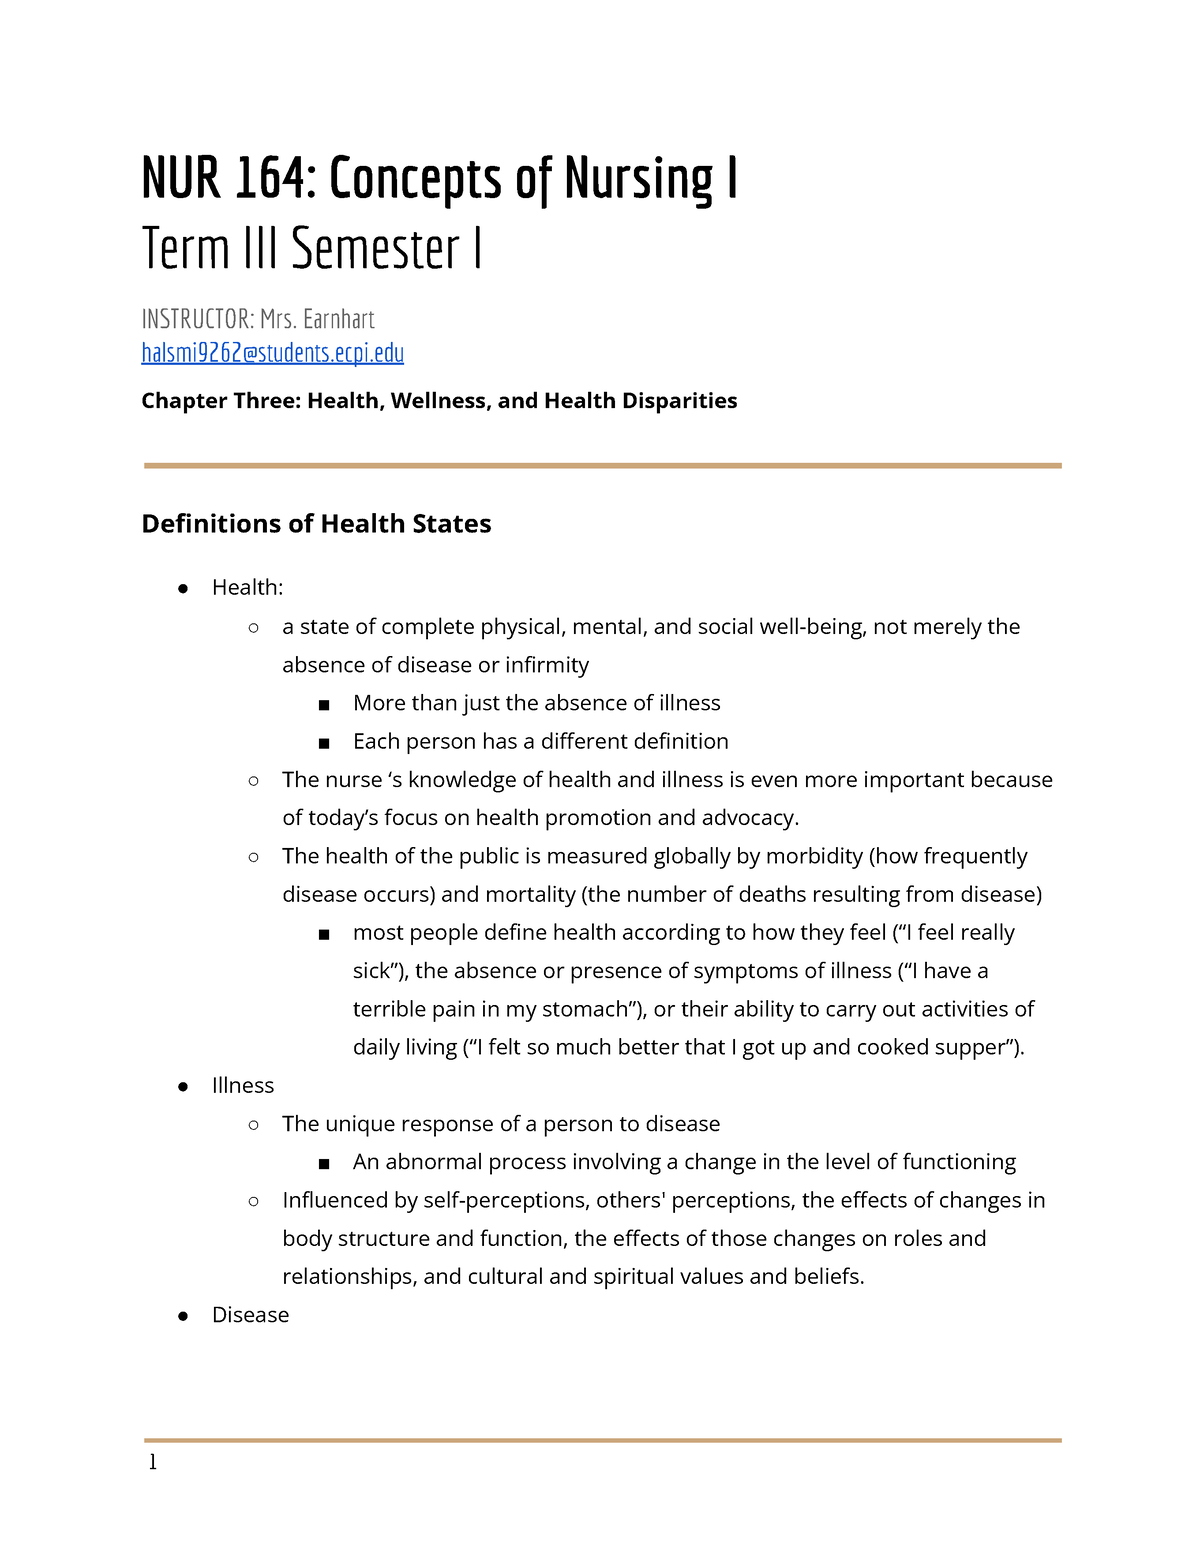 NUR 164 Chapter 3 Notes - NUR 164: Concepts of Nursing I Term III ...